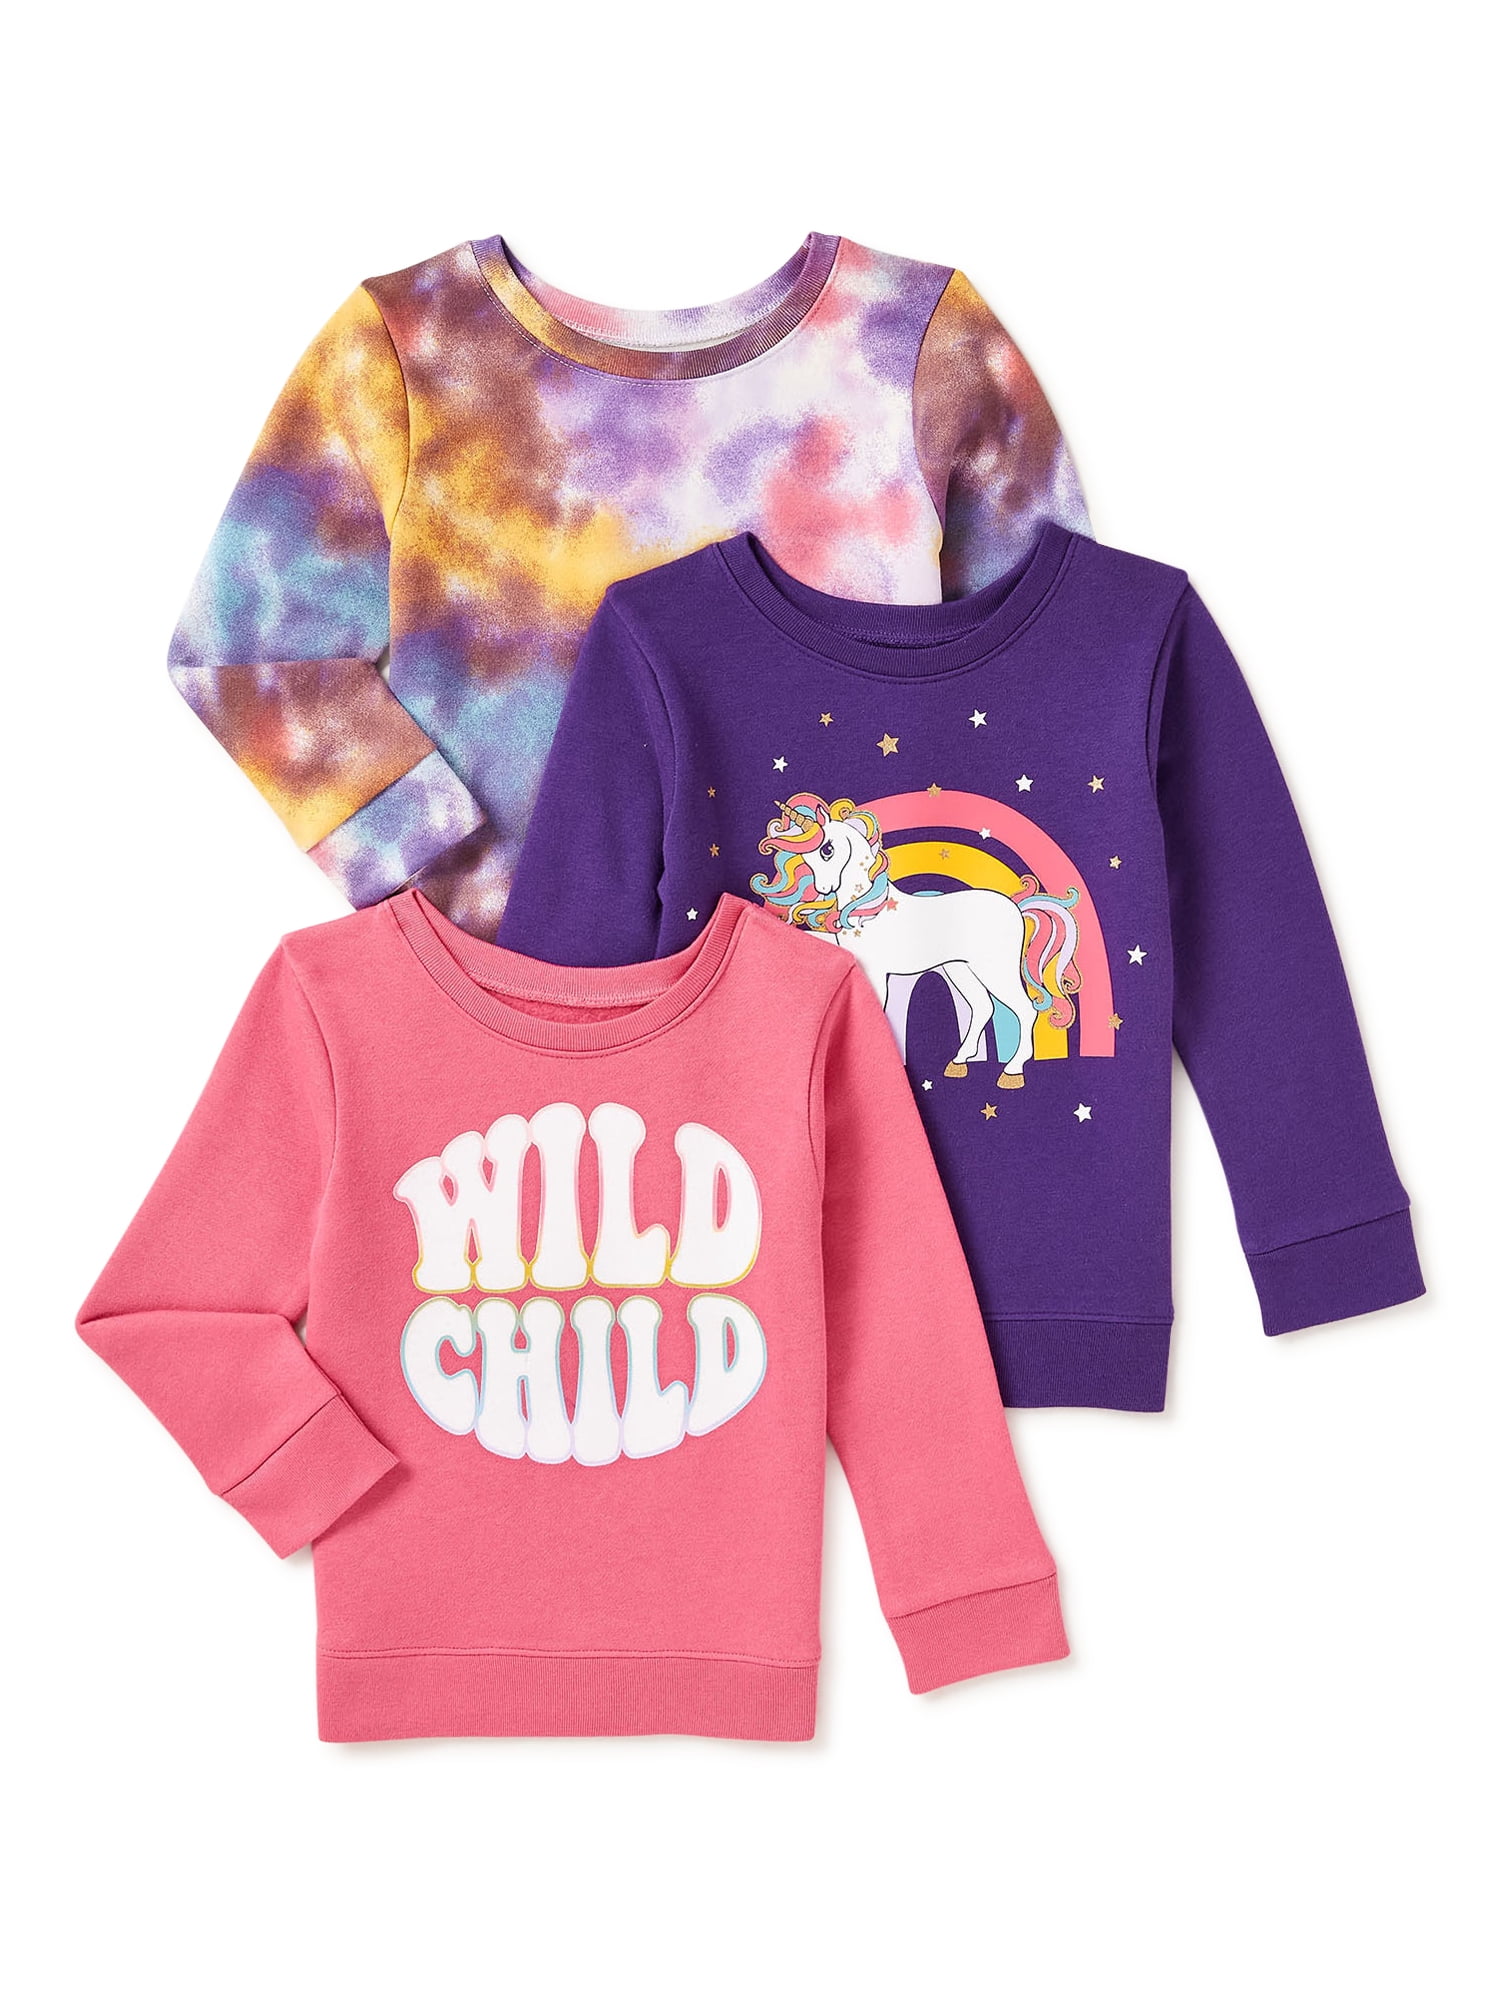 Sweatshirt Kids Toddlers Girls Outerwear Black Unicorn Garanimals 3T 5T 